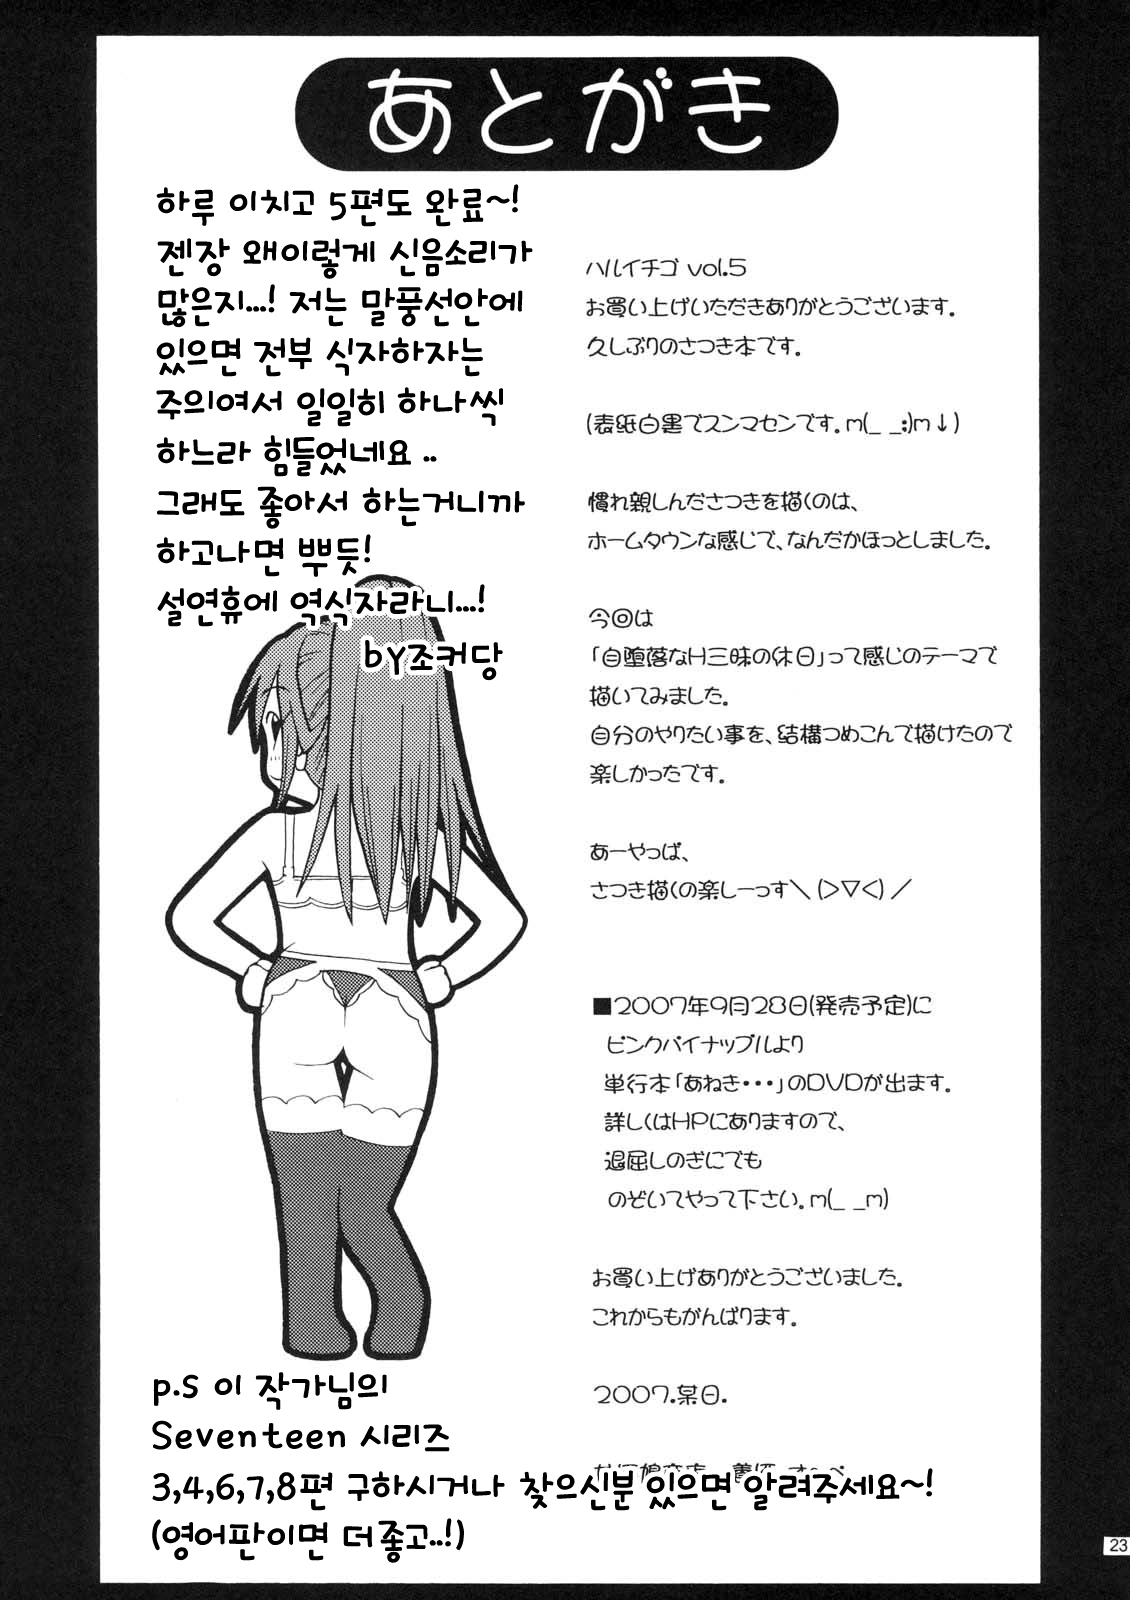 (C72) [Amazake Hatosyo-ten (Yoshu Ohepe)] Haru Ichigo Vol. 5 - Spring Strawberry Vol. 5 (Ichigo 100%) [Korean] [조커당] (C72) [甘酒鳩商店 (養酒オヘペ)] ハルイチゴ Vol.5 (いちご100%) [韓国翻訳]